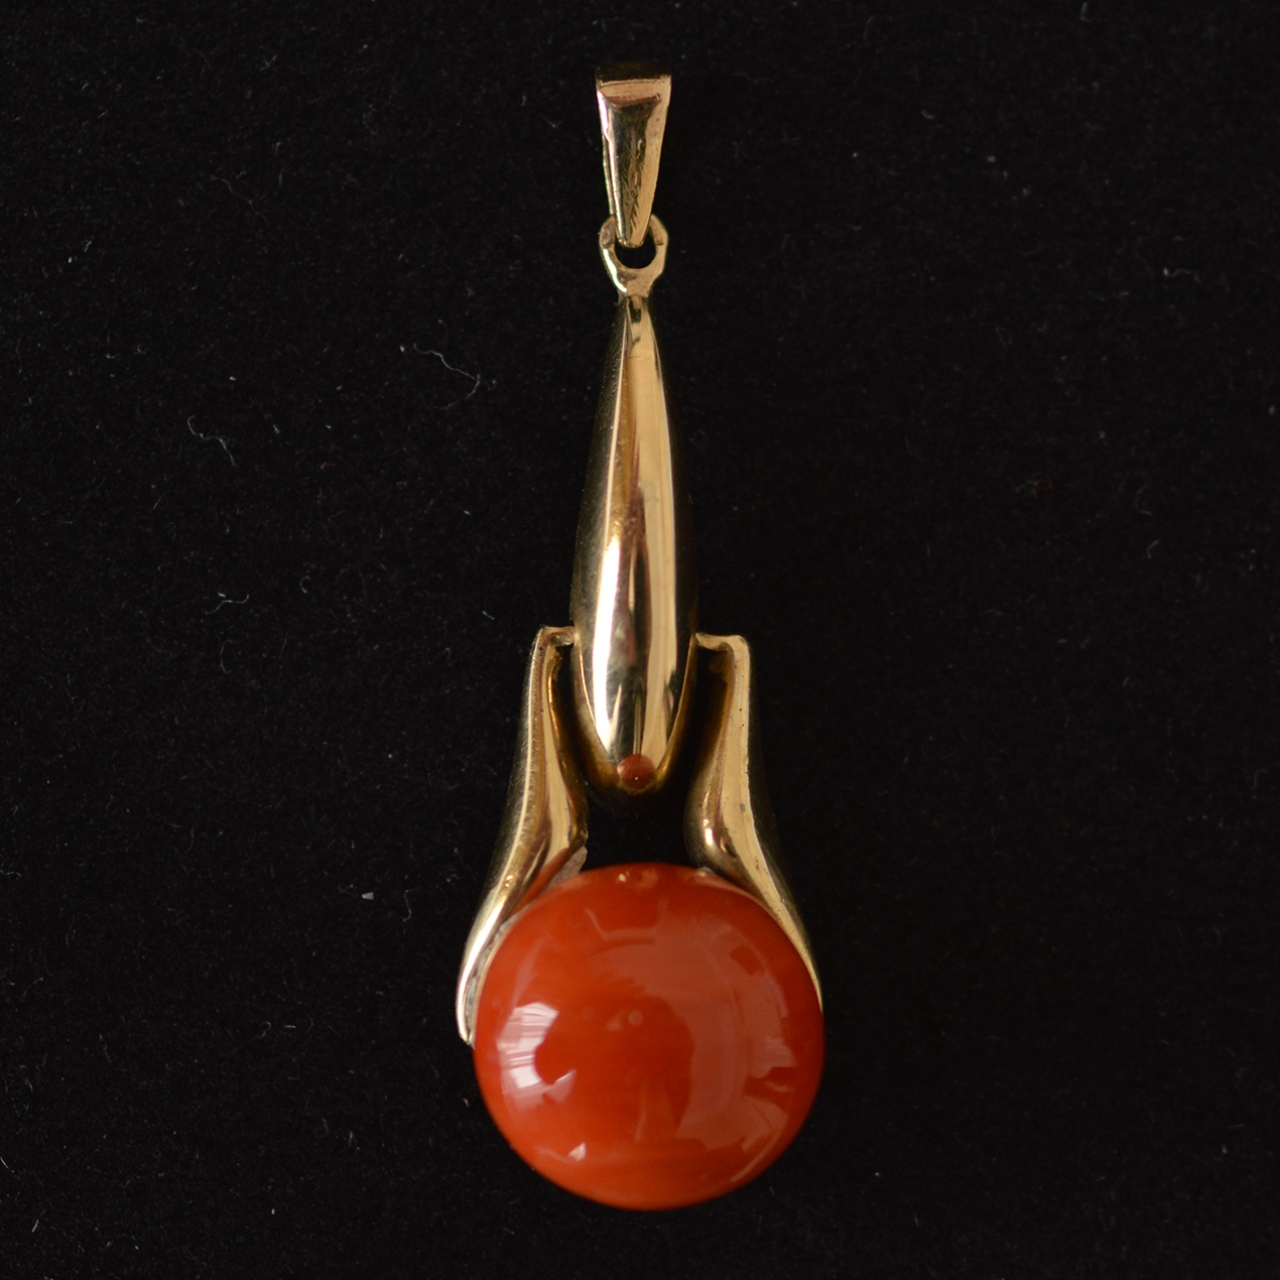 amsterdamse-school-antique-gold-coral-pendant